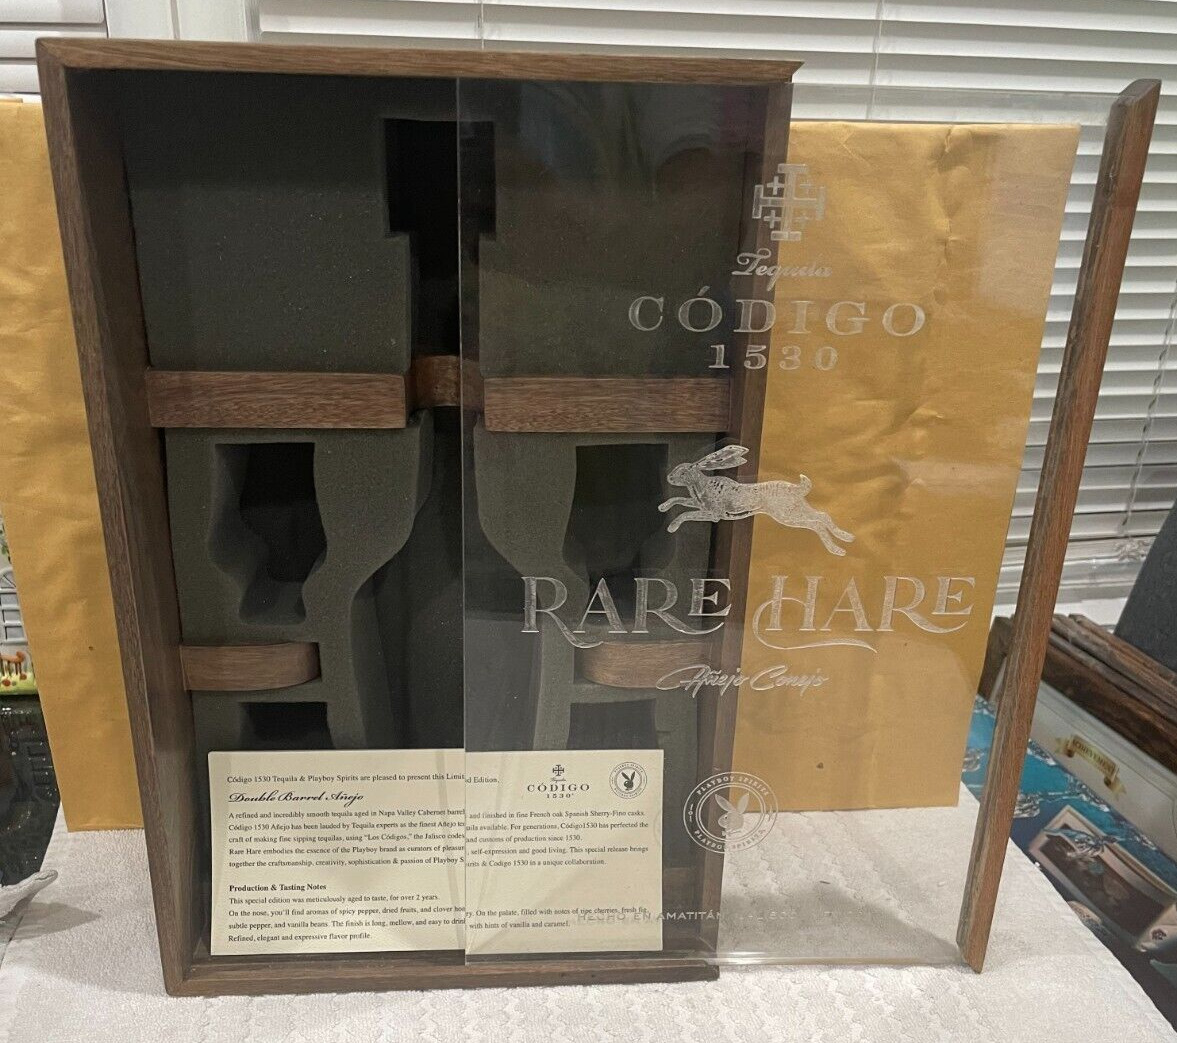 RARE HARE CODIGO 1530 TEQUILA SPECIAL PLAYBOY EDITION EMPTY WOOD & GLASS CASE